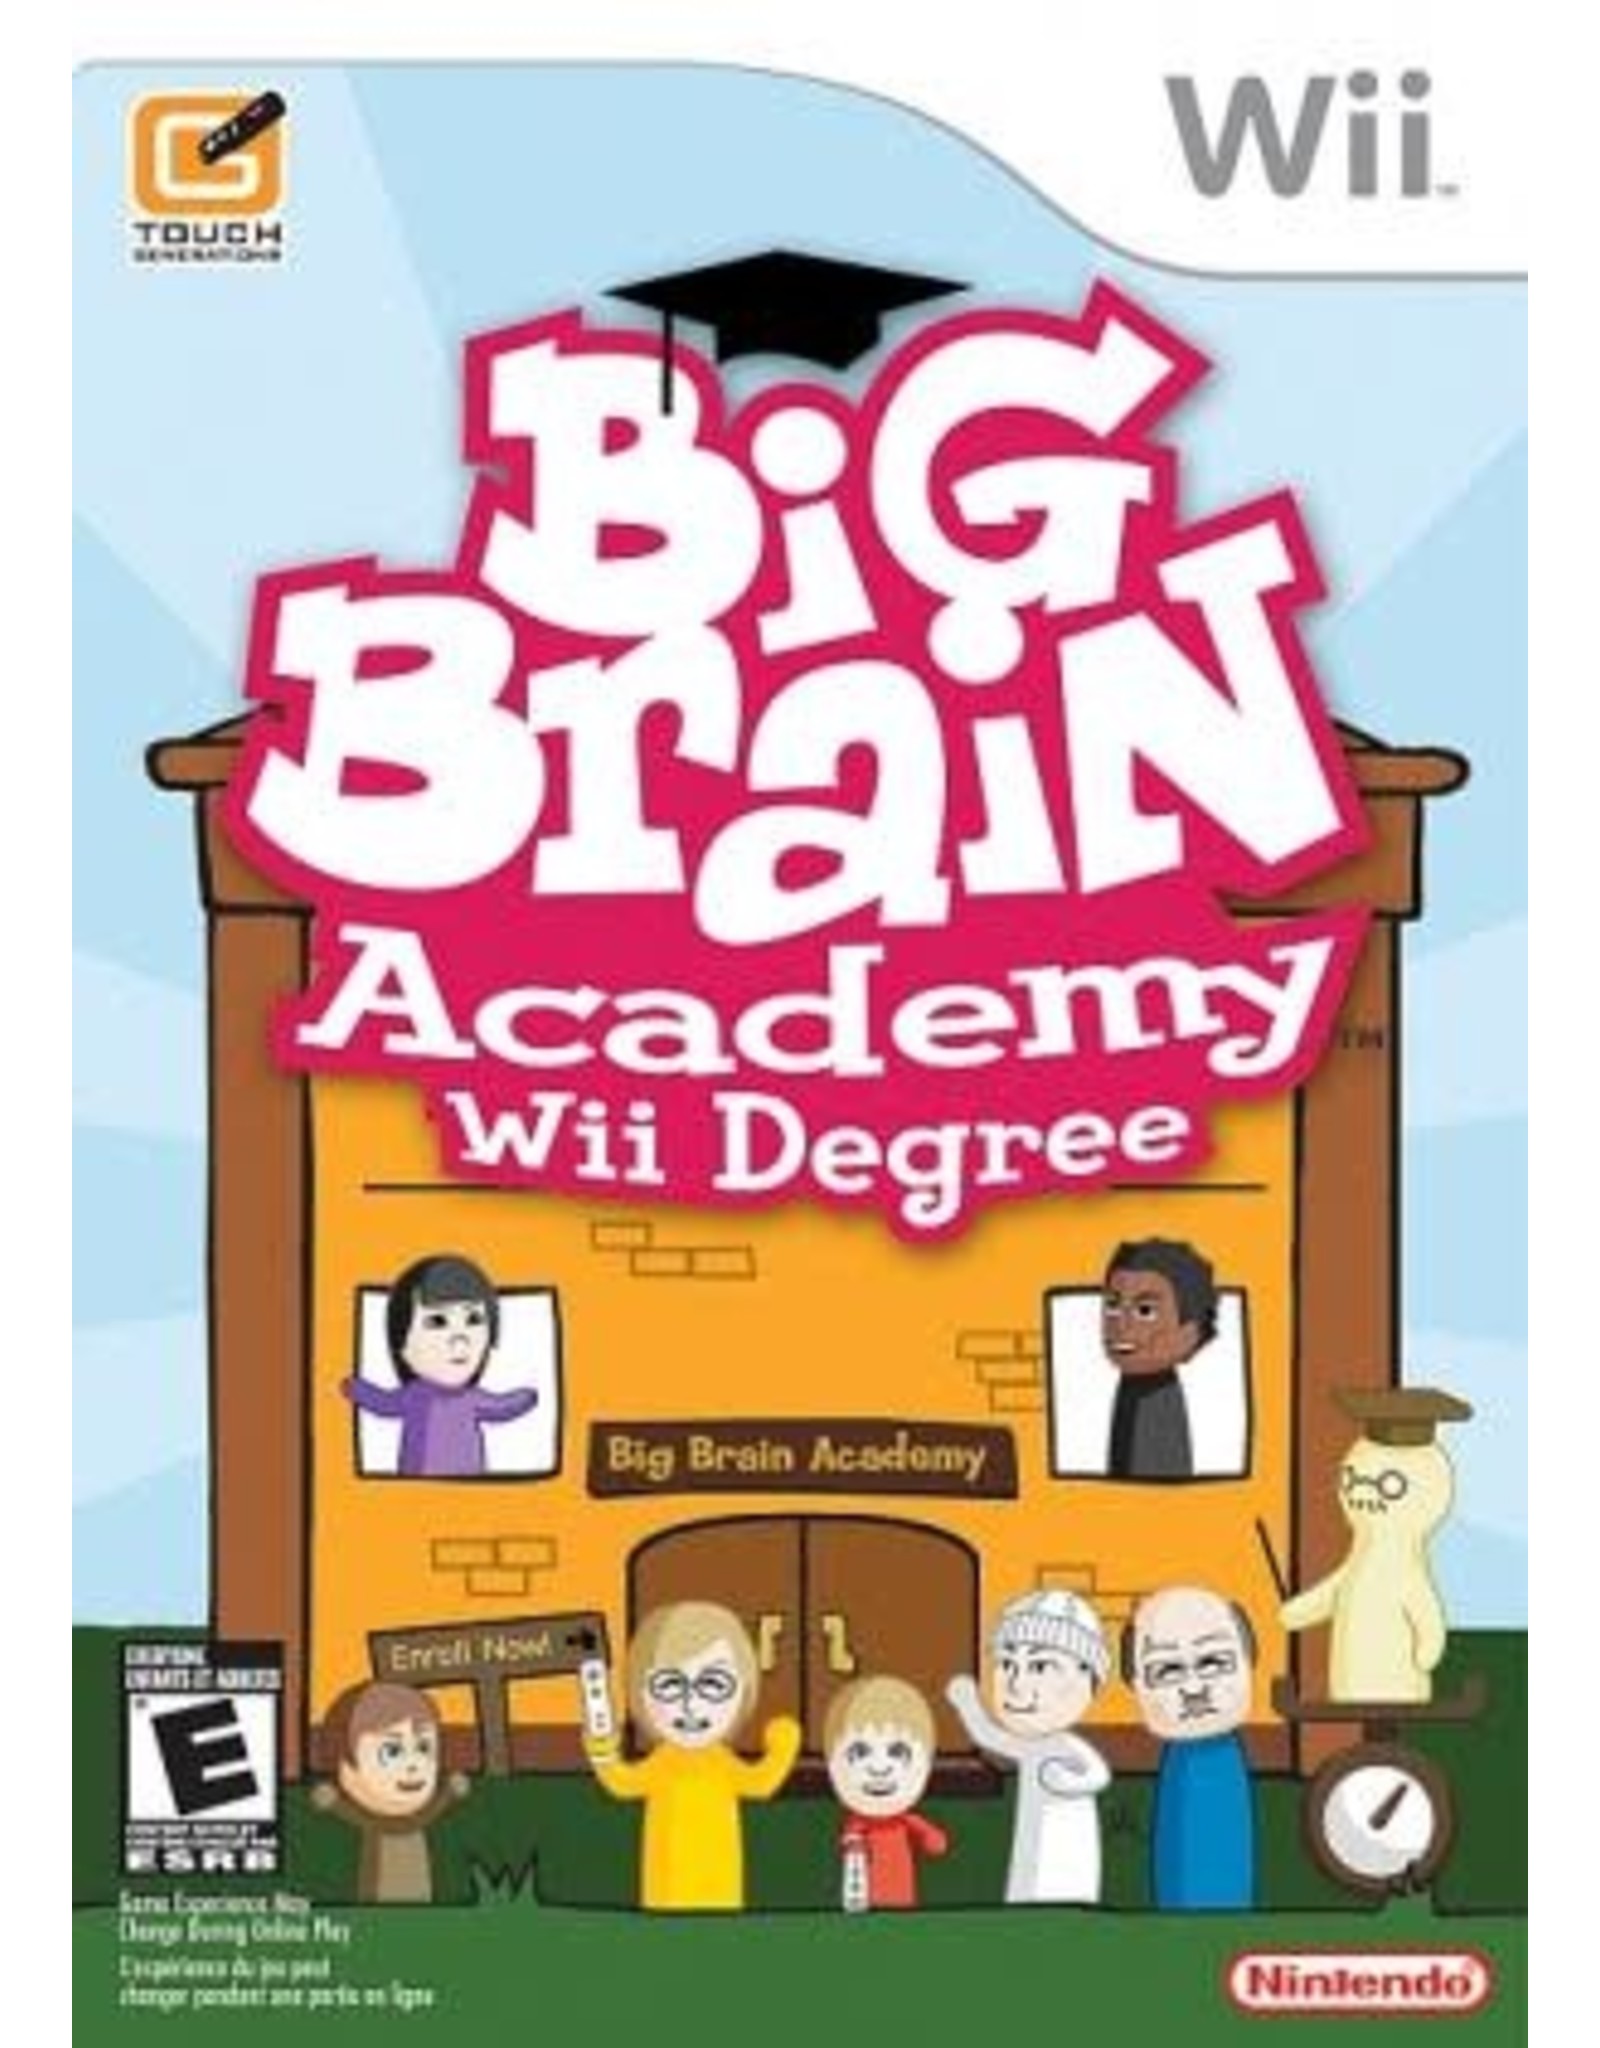 Wii Big Brain Academy Wii Degree (CiB)